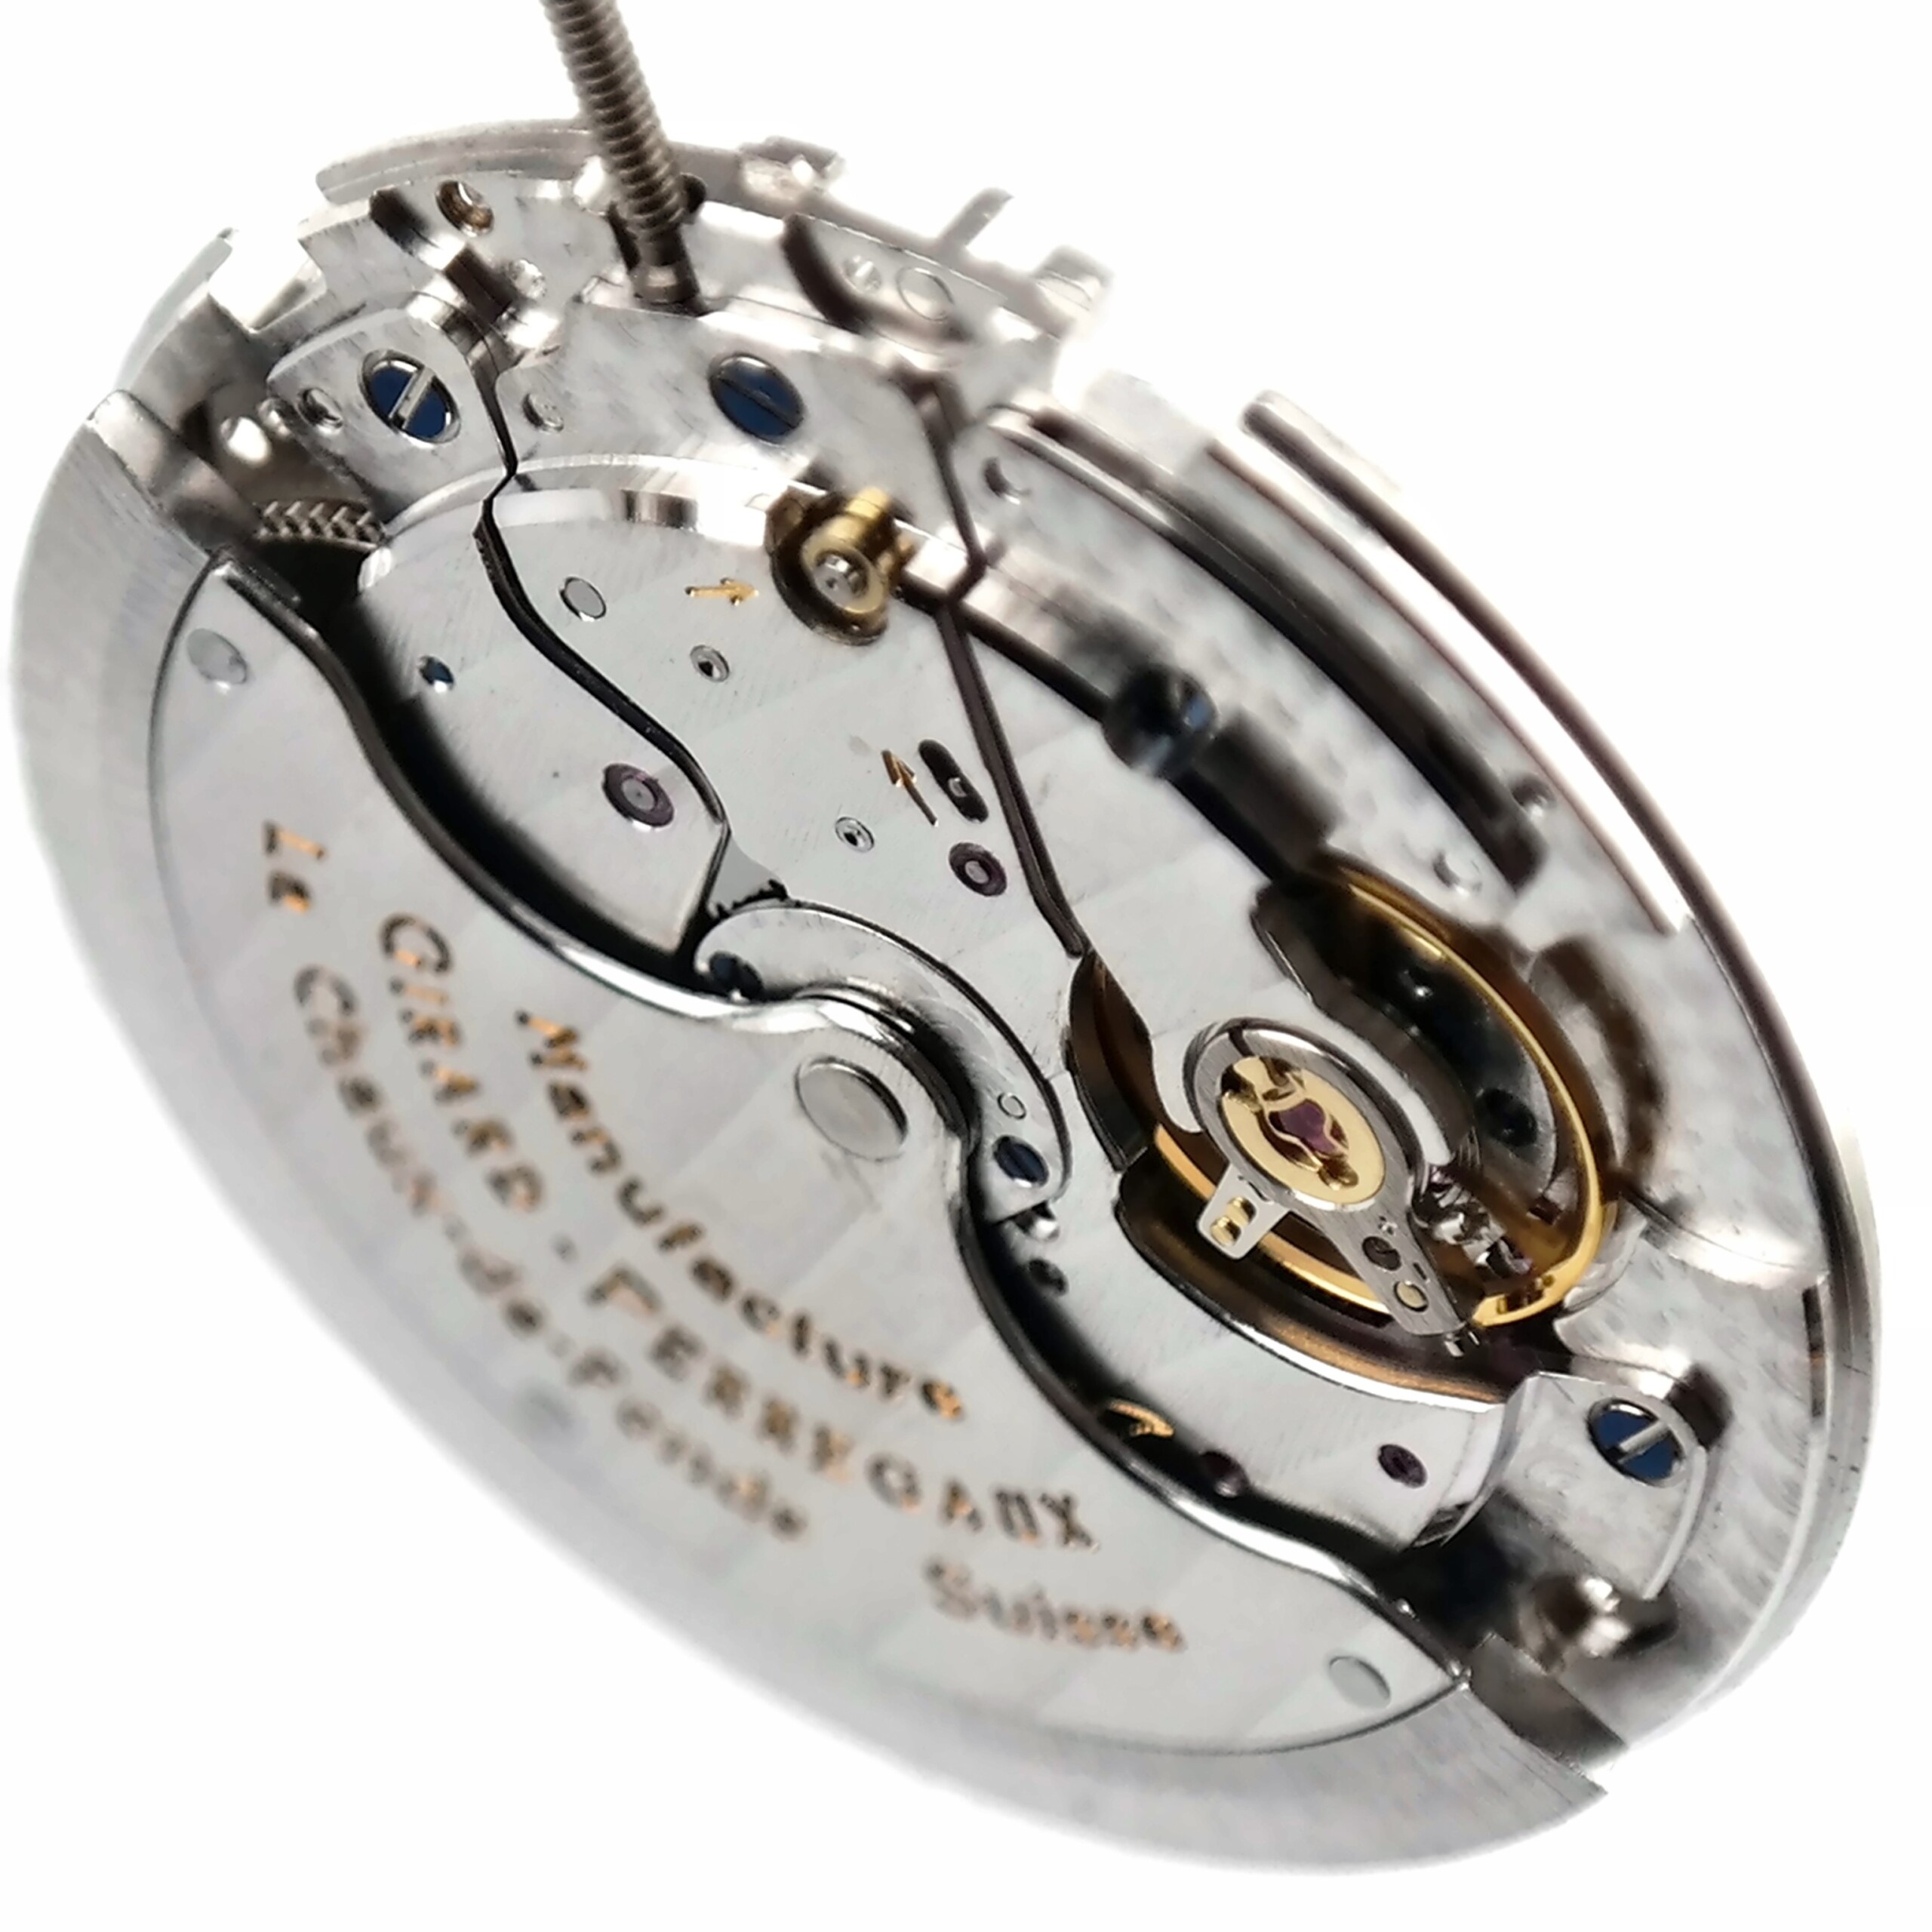 girard perregaux calibre 33g0.9 automatic watch movement